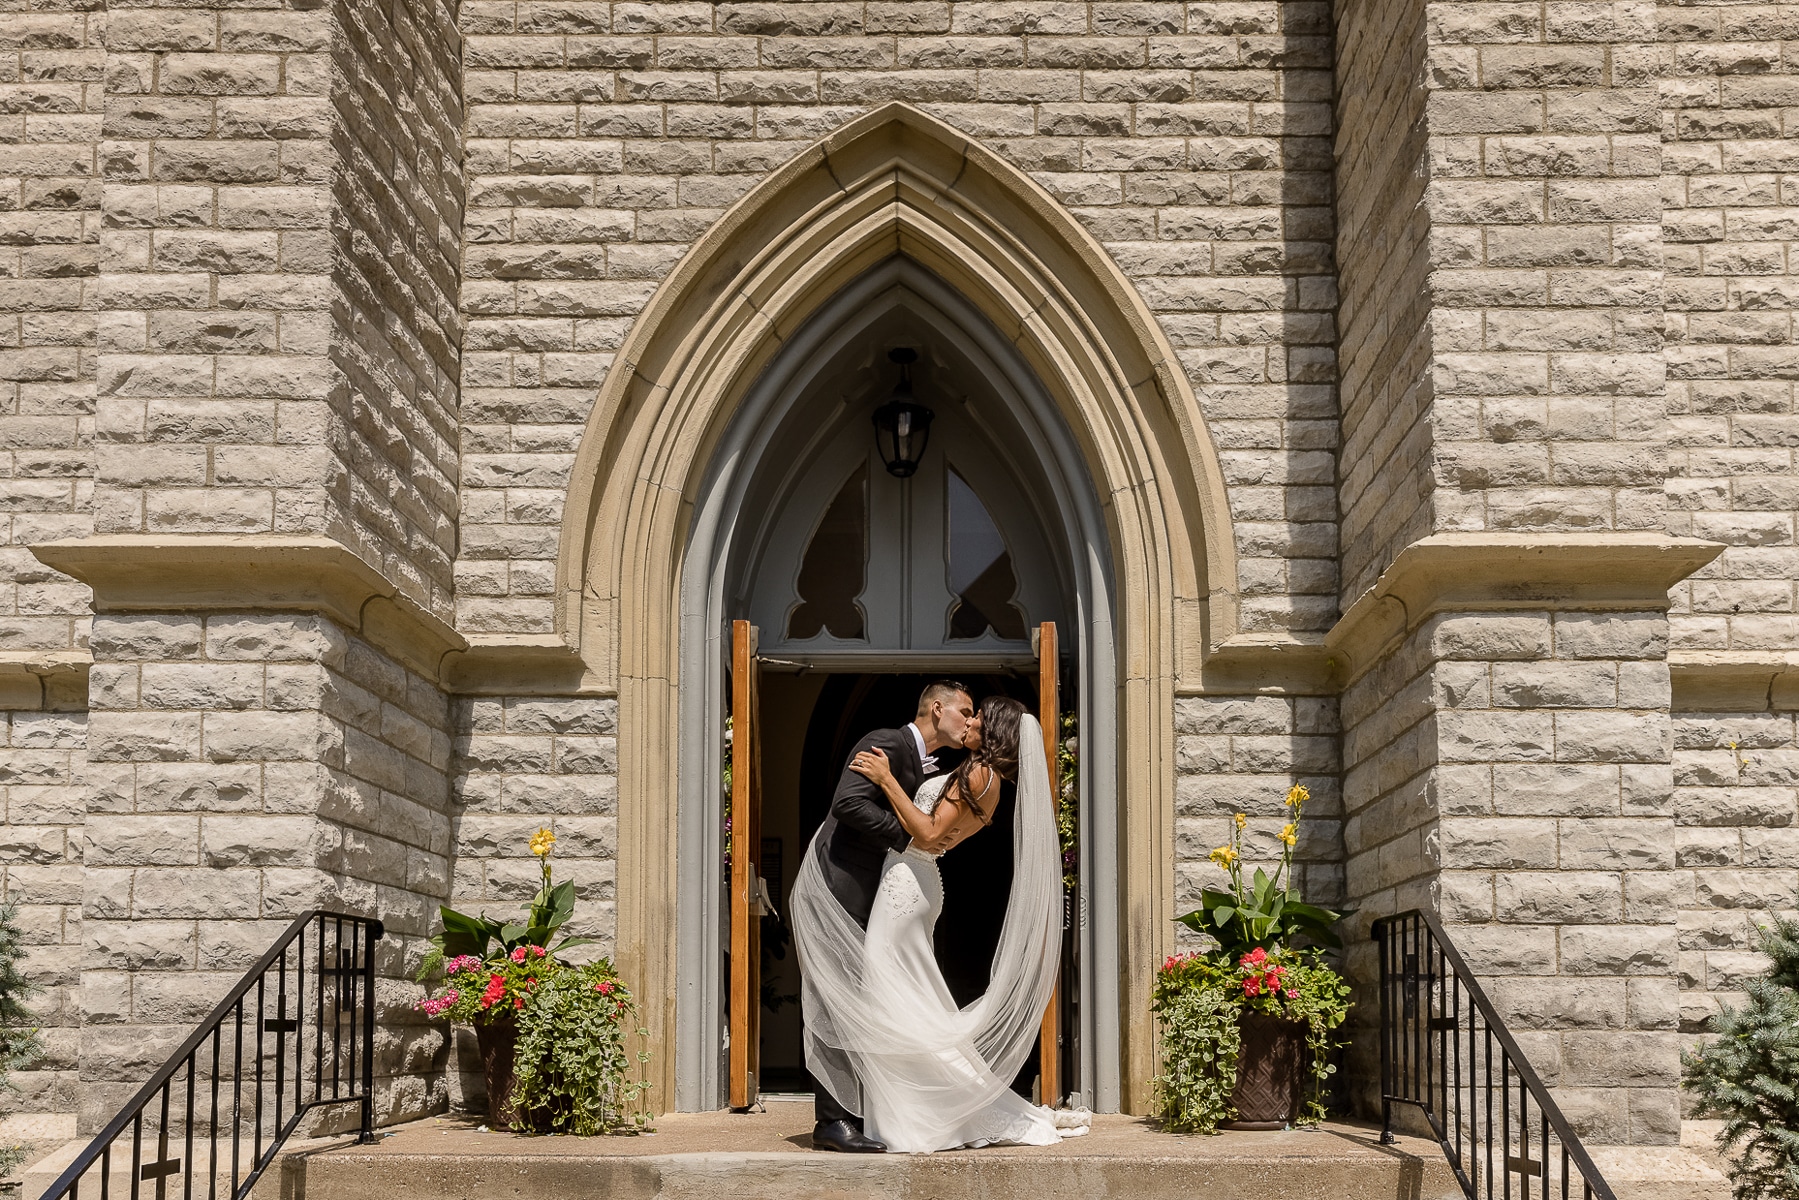 Celebrating Life - A Spectacular Summer Wedding Ceremony at St. Peter and Paul Catholic Church and Lyman Harbor | Sara + Nick